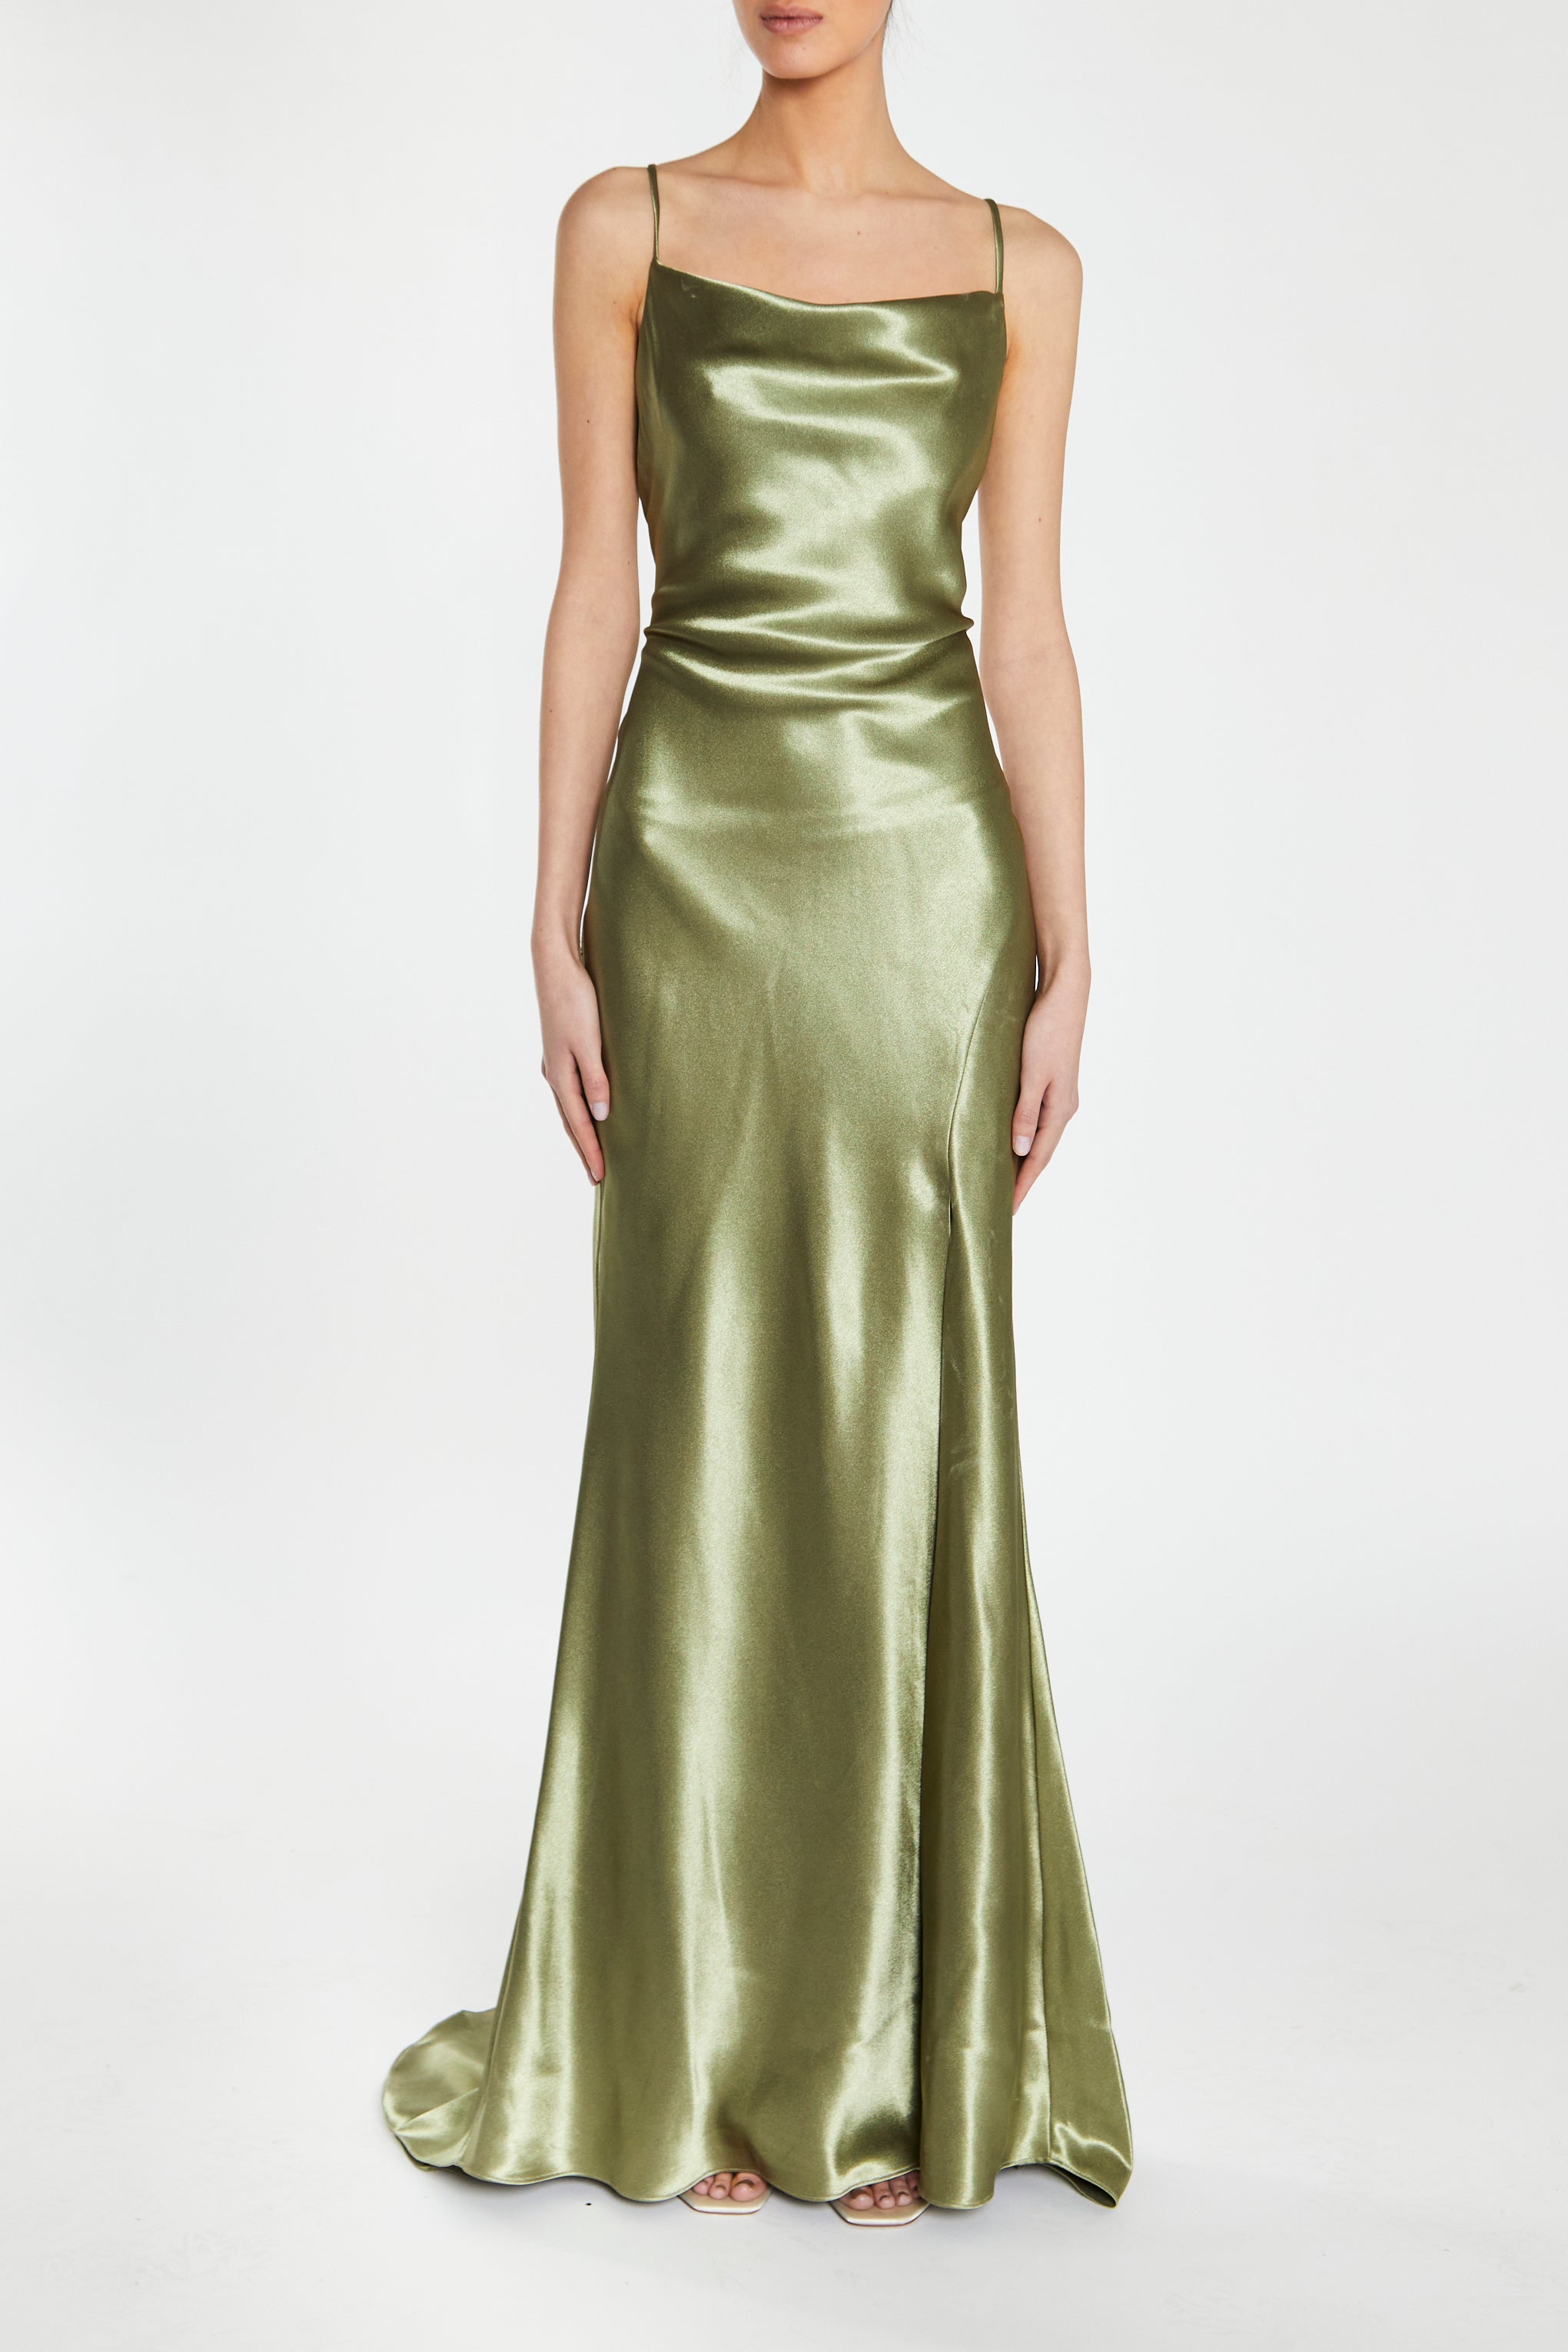 Pippa Sage Green Bridesmaid Cowl-Neck Slip Dress-image-1